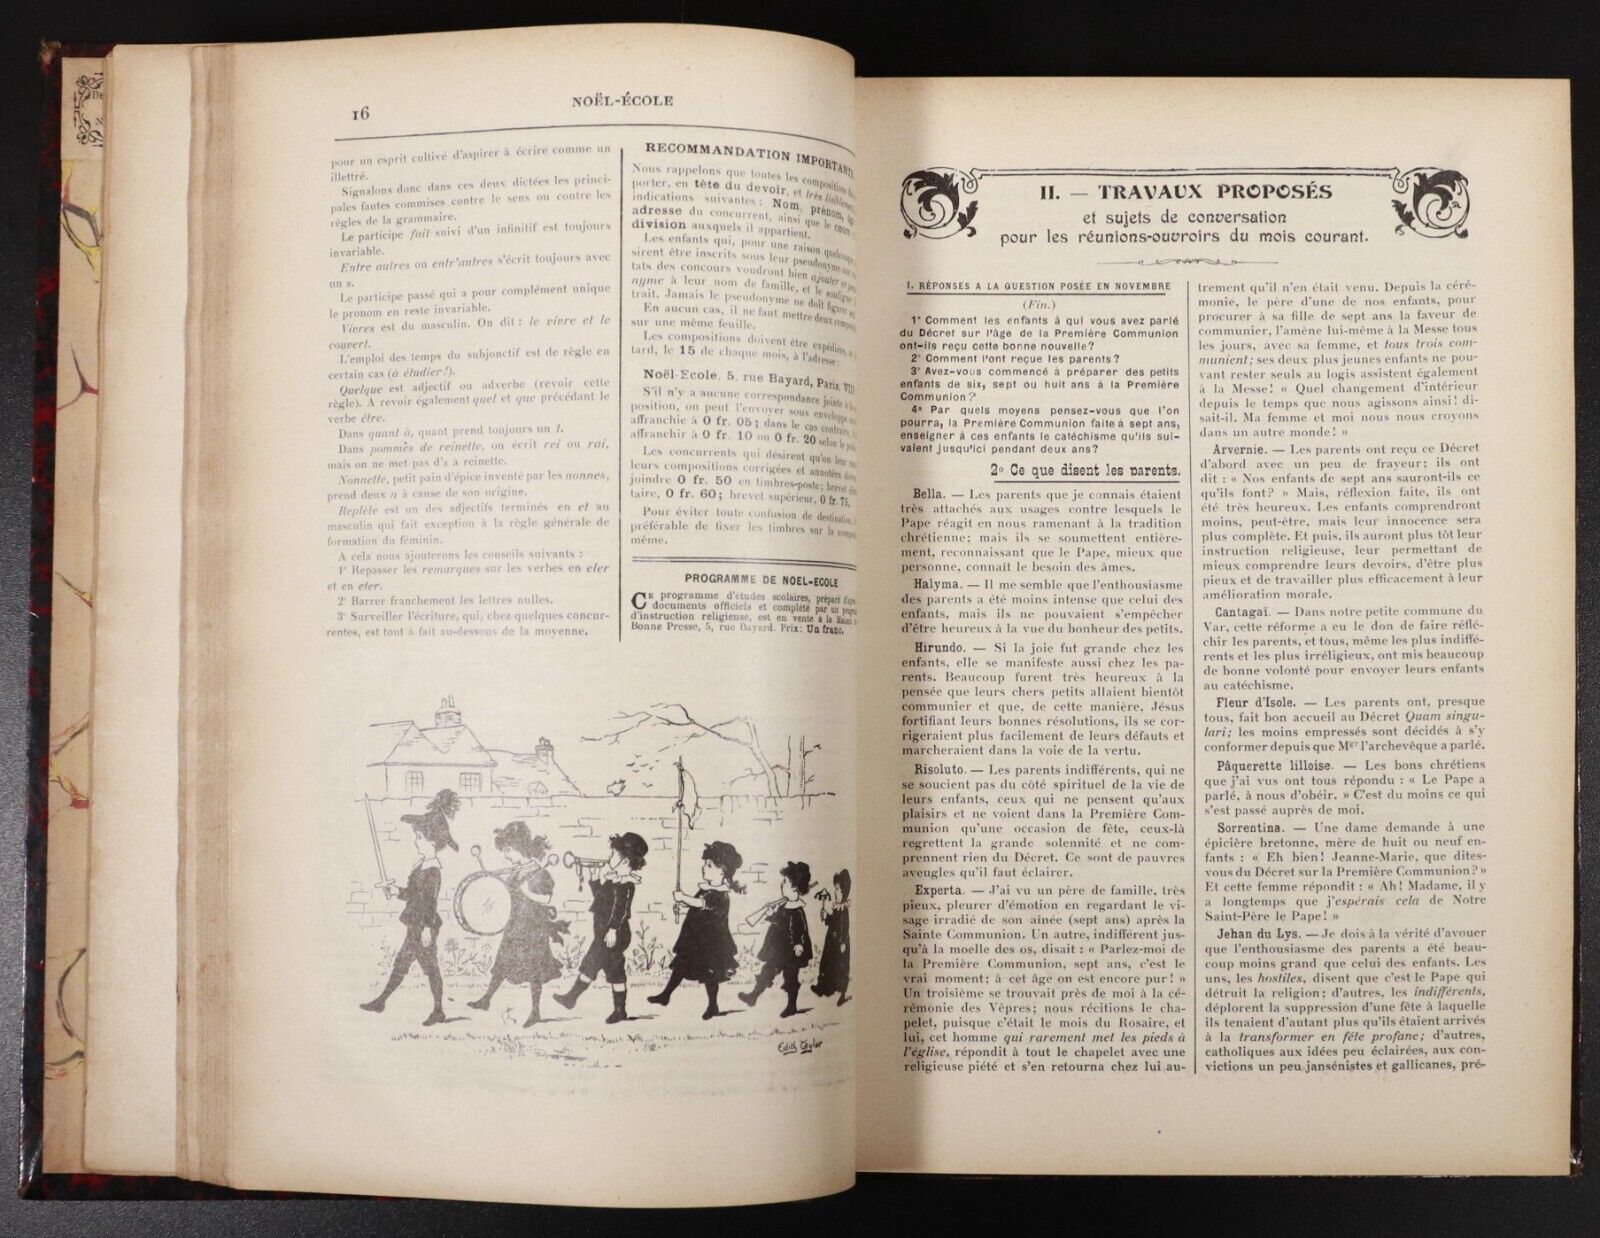 1911 Petite Academie Noeliste Antique French Literature Magazine Book Scarce